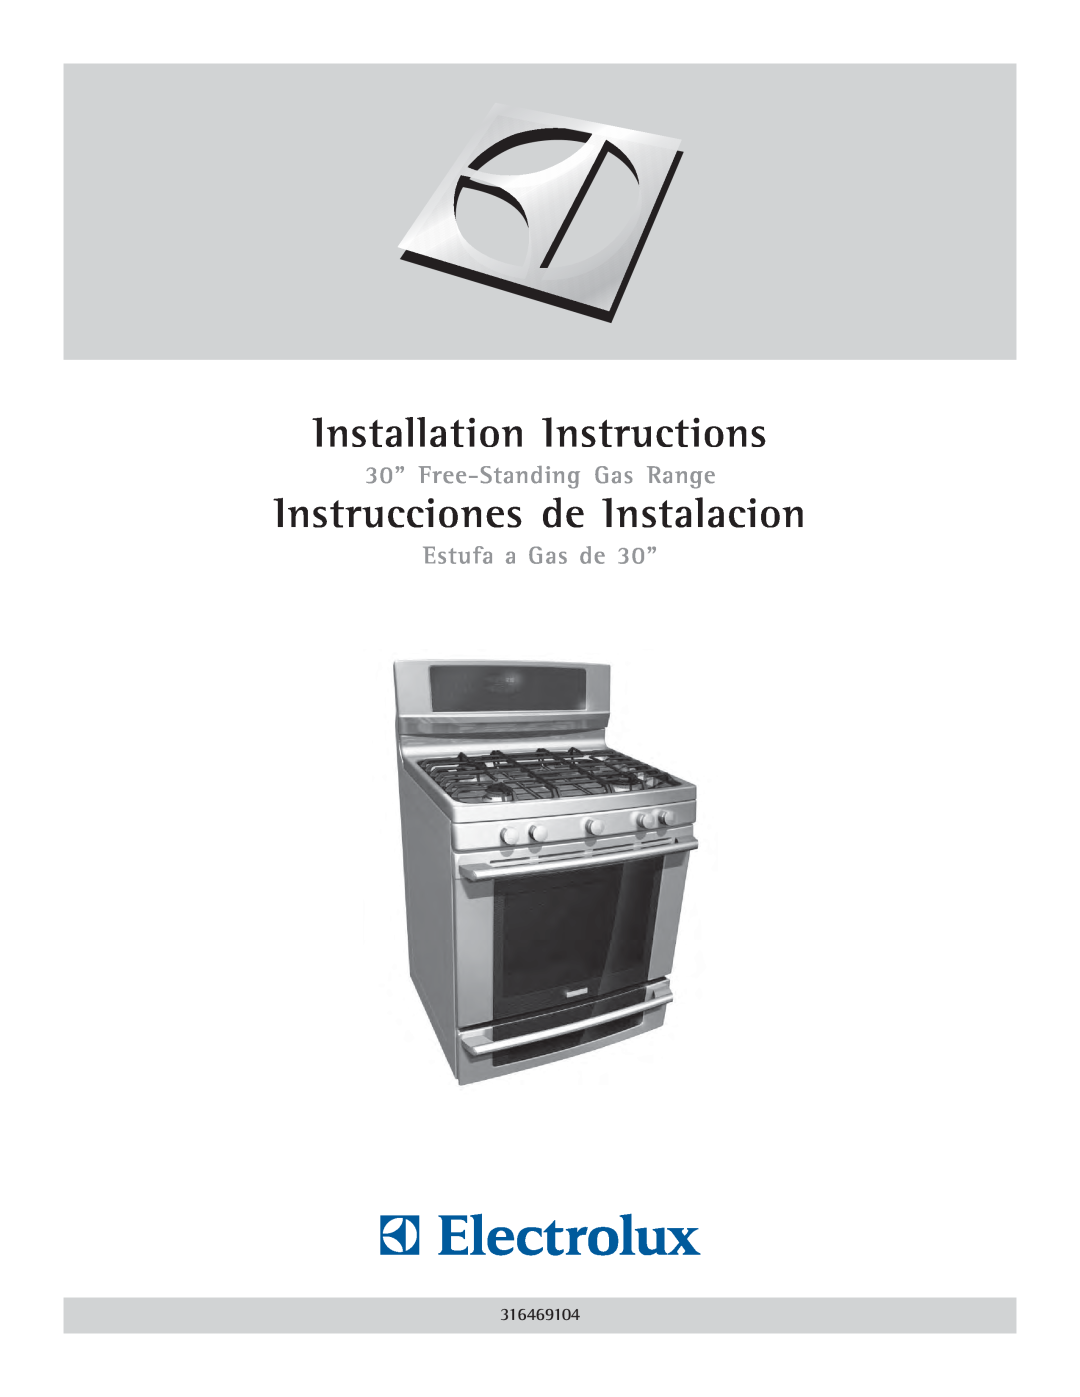 Electrolux 316469104 installation instructions Installation Instructions, Instrucciones de Instalacion, Estufa a Gas de 